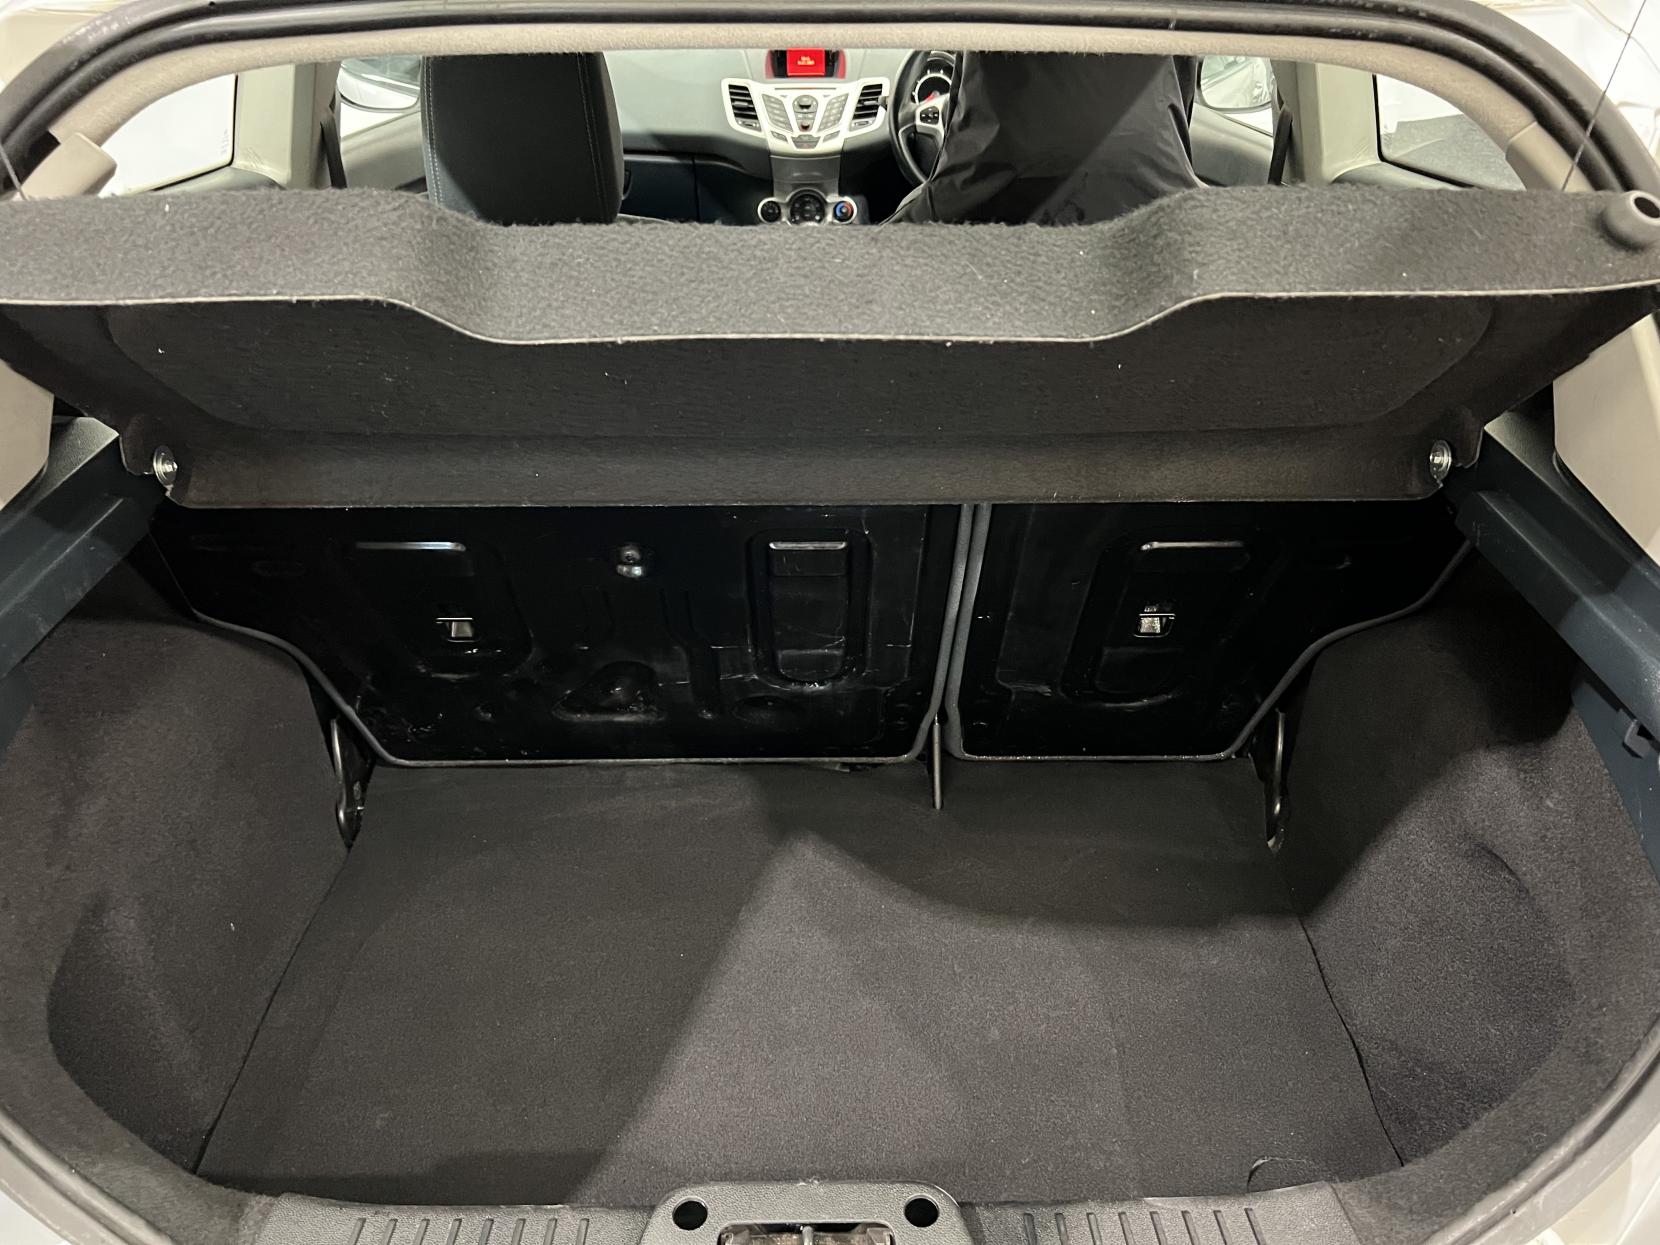 Ford Fiesta 1.25 Zetec Hatchback 3dr Petrol Manual (133 g/km, 81 bhp)